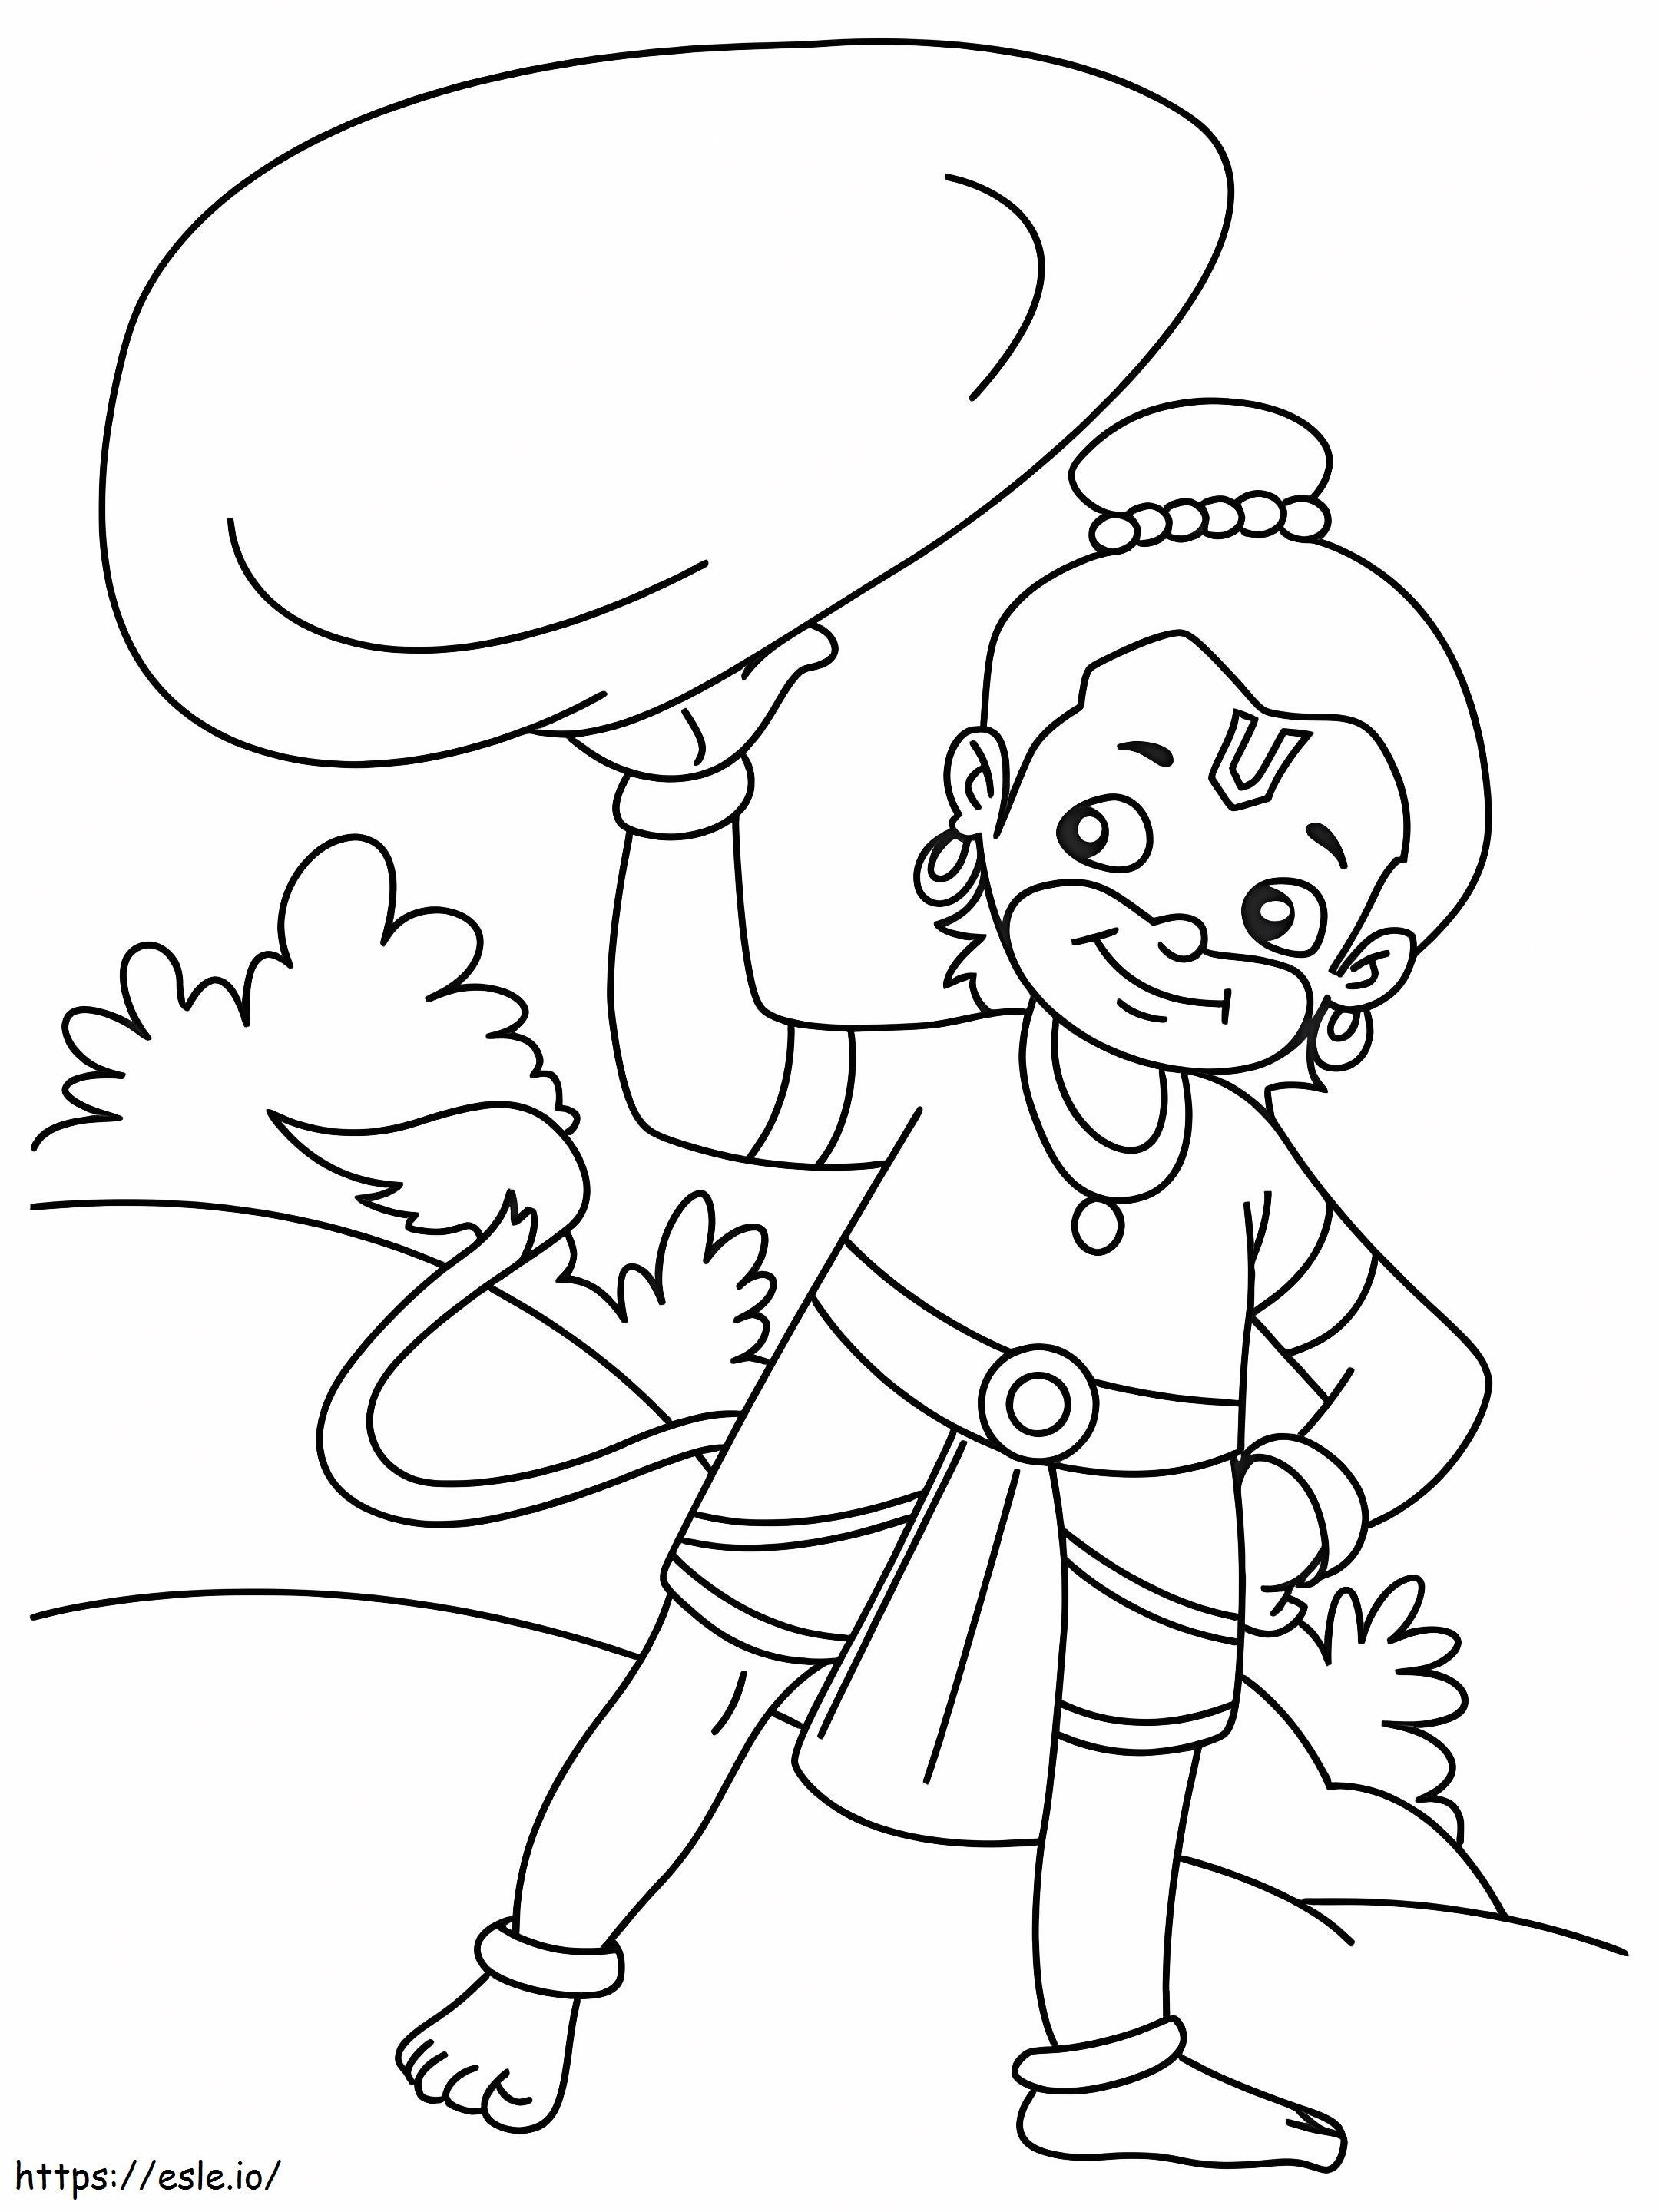 Hanumana 3 kolorowanka